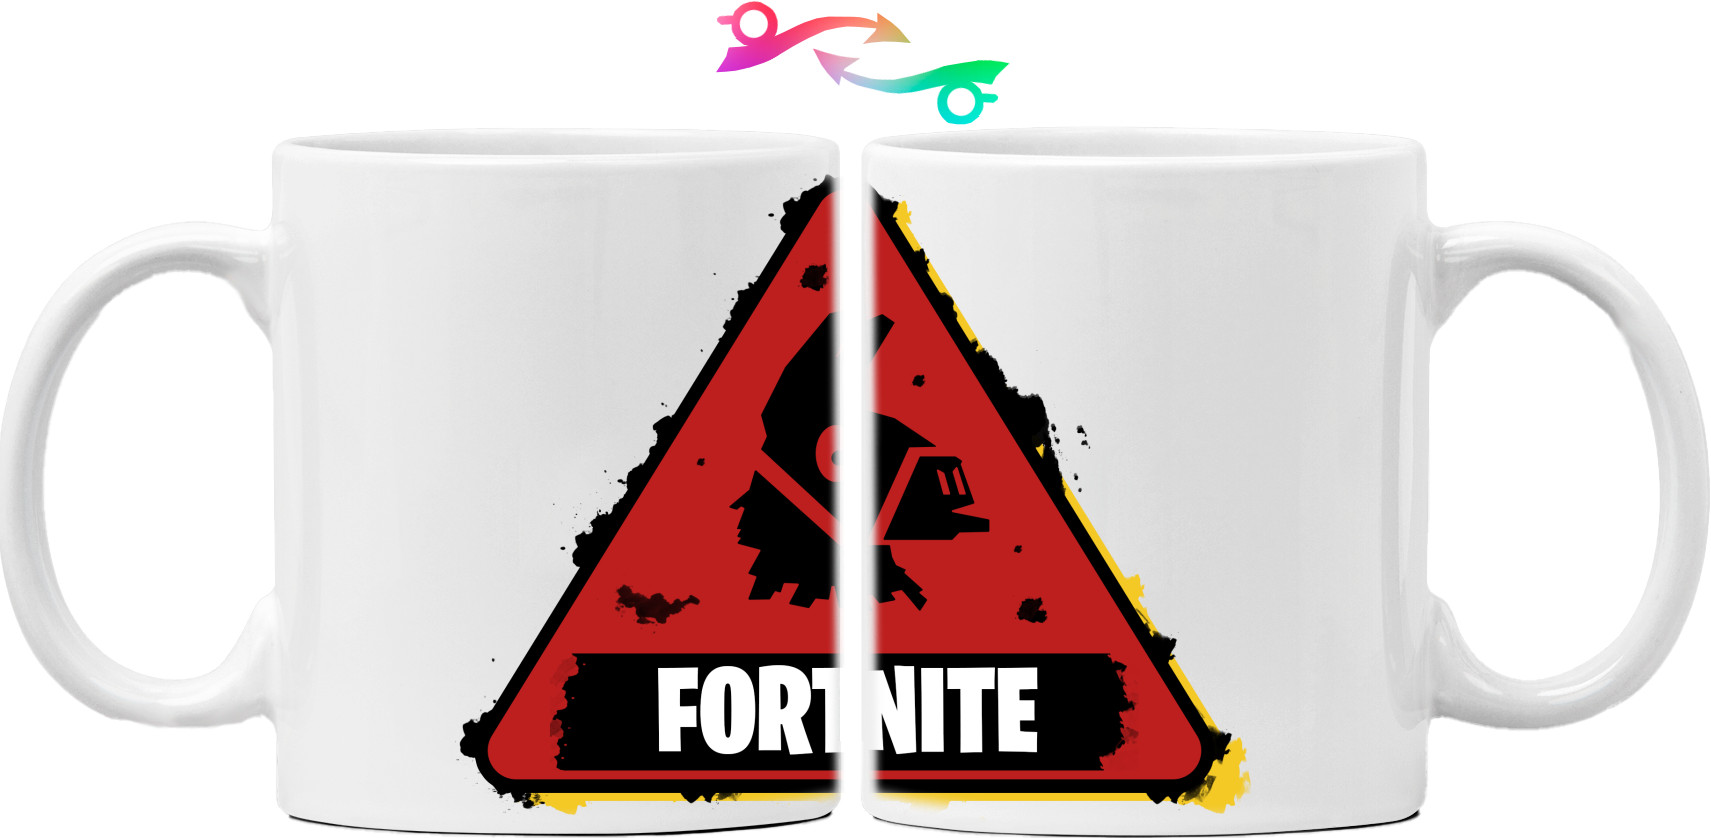 Fortnite road sign